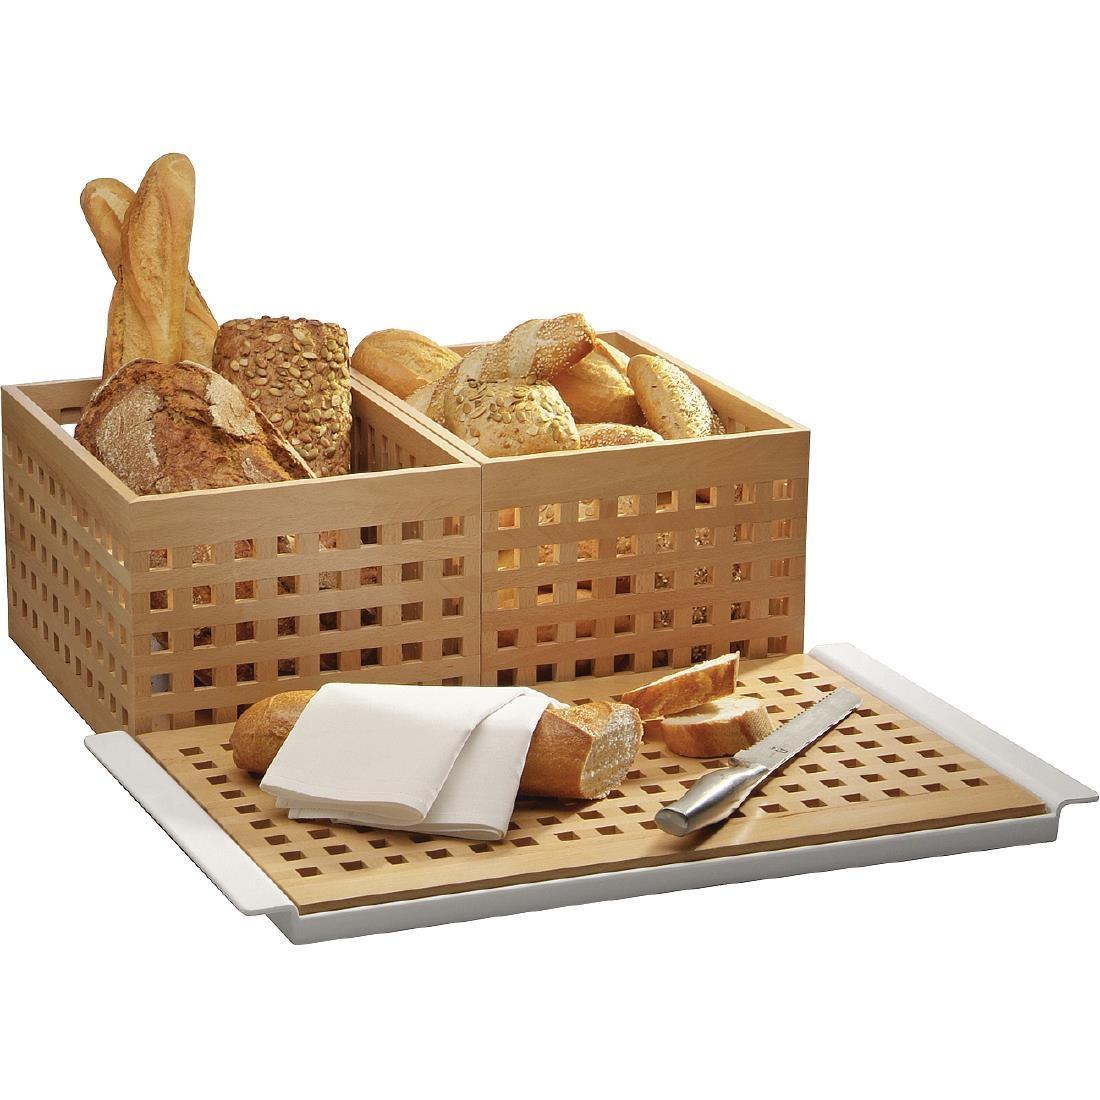 APS Breadstation Breadbox 125mm - GH395  - 3